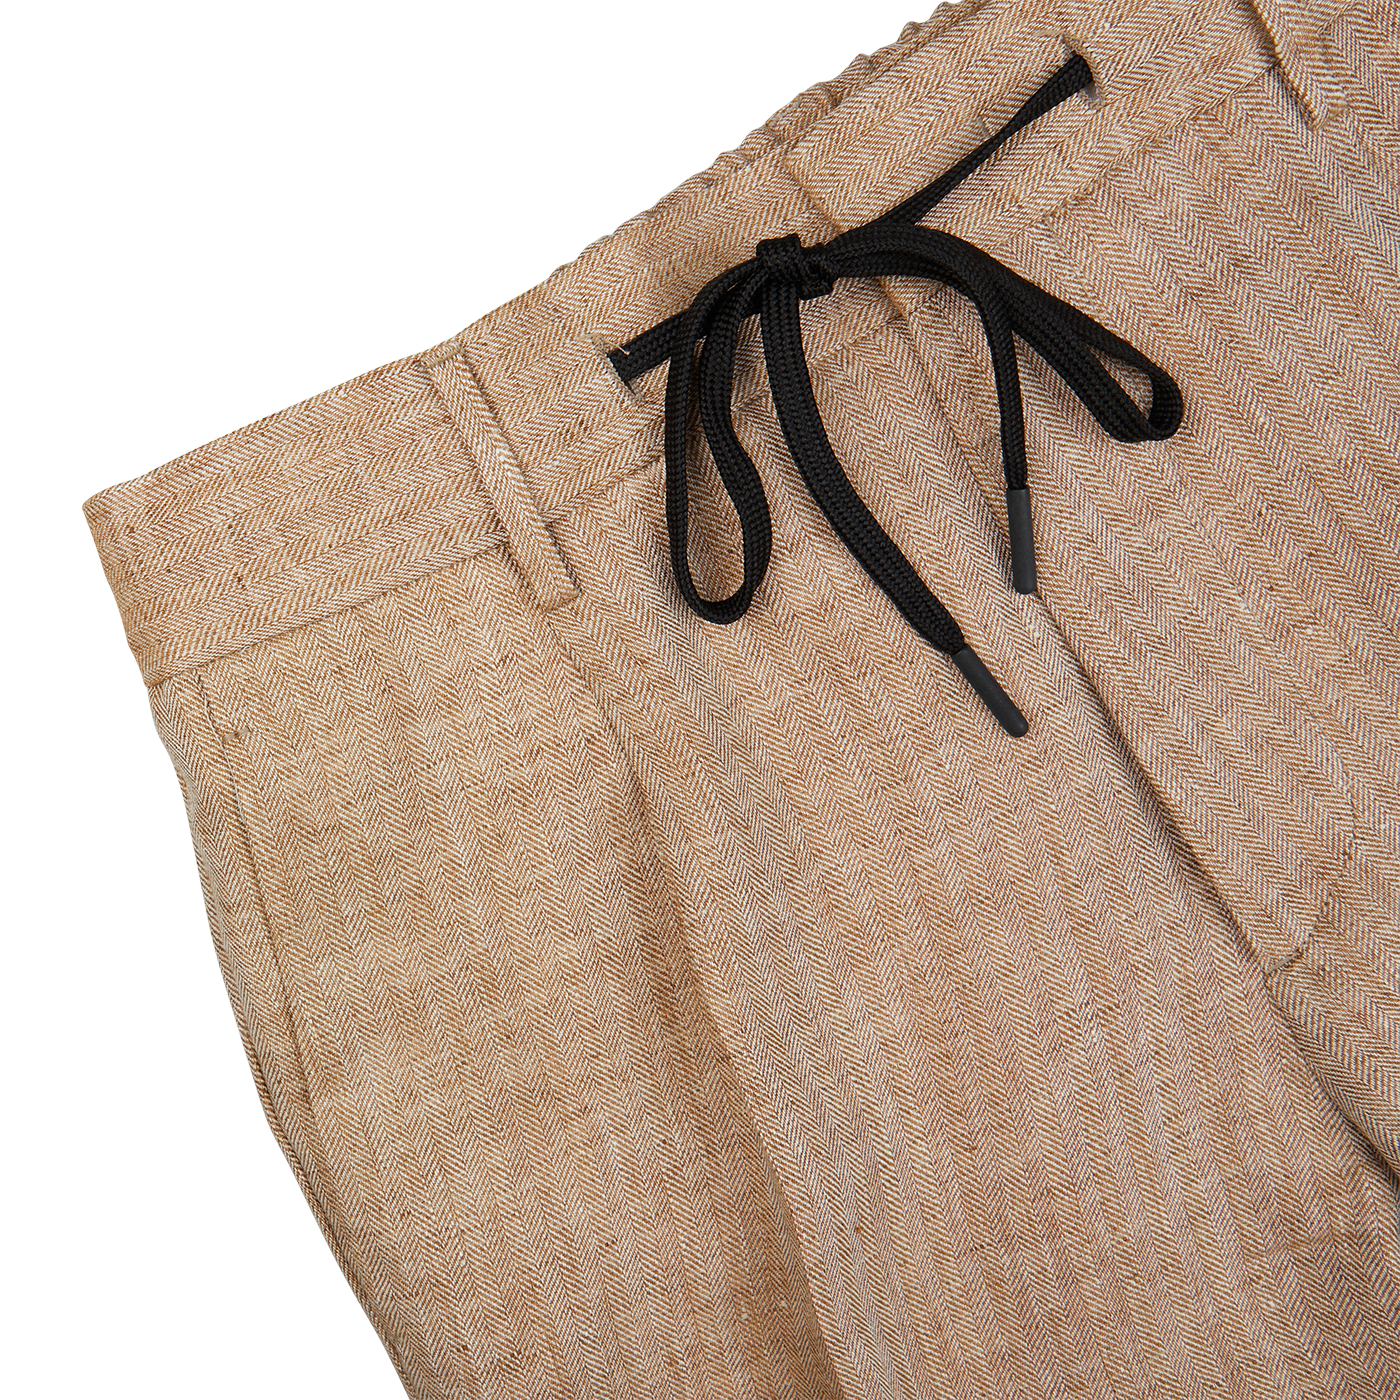 A pair of beige linen herringbone drawstring trousers by Berwich.